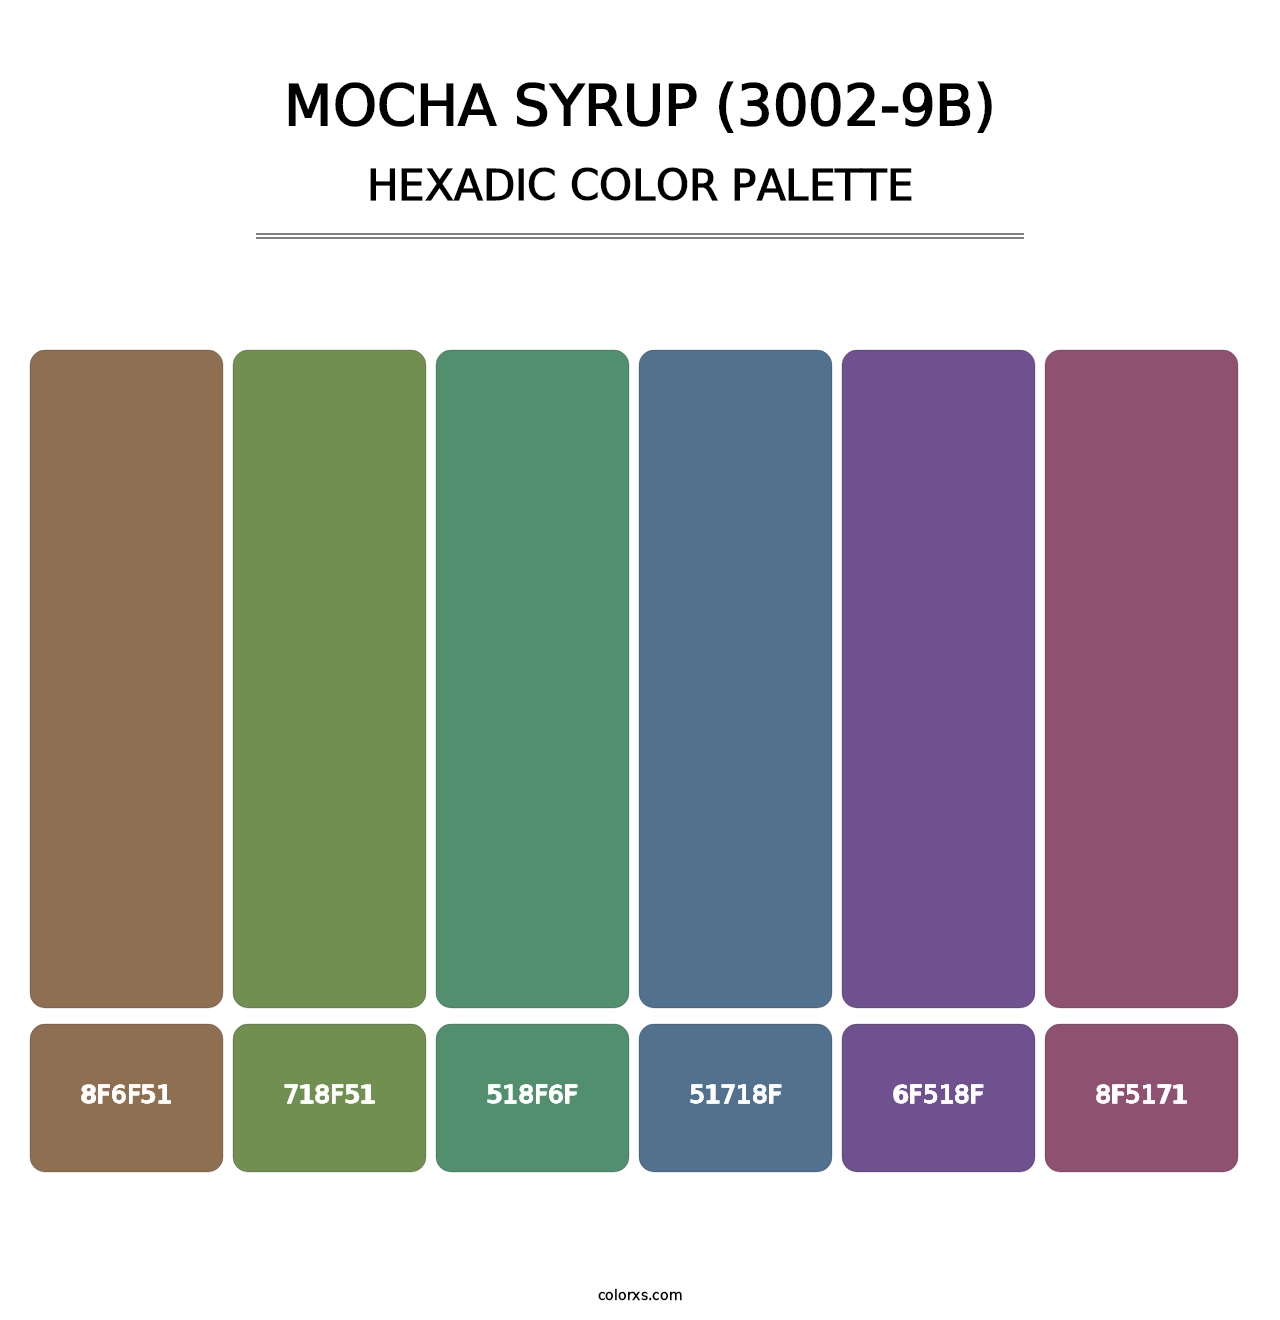 Mocha Syrup (3002-9B) - Hexadic Color Palette